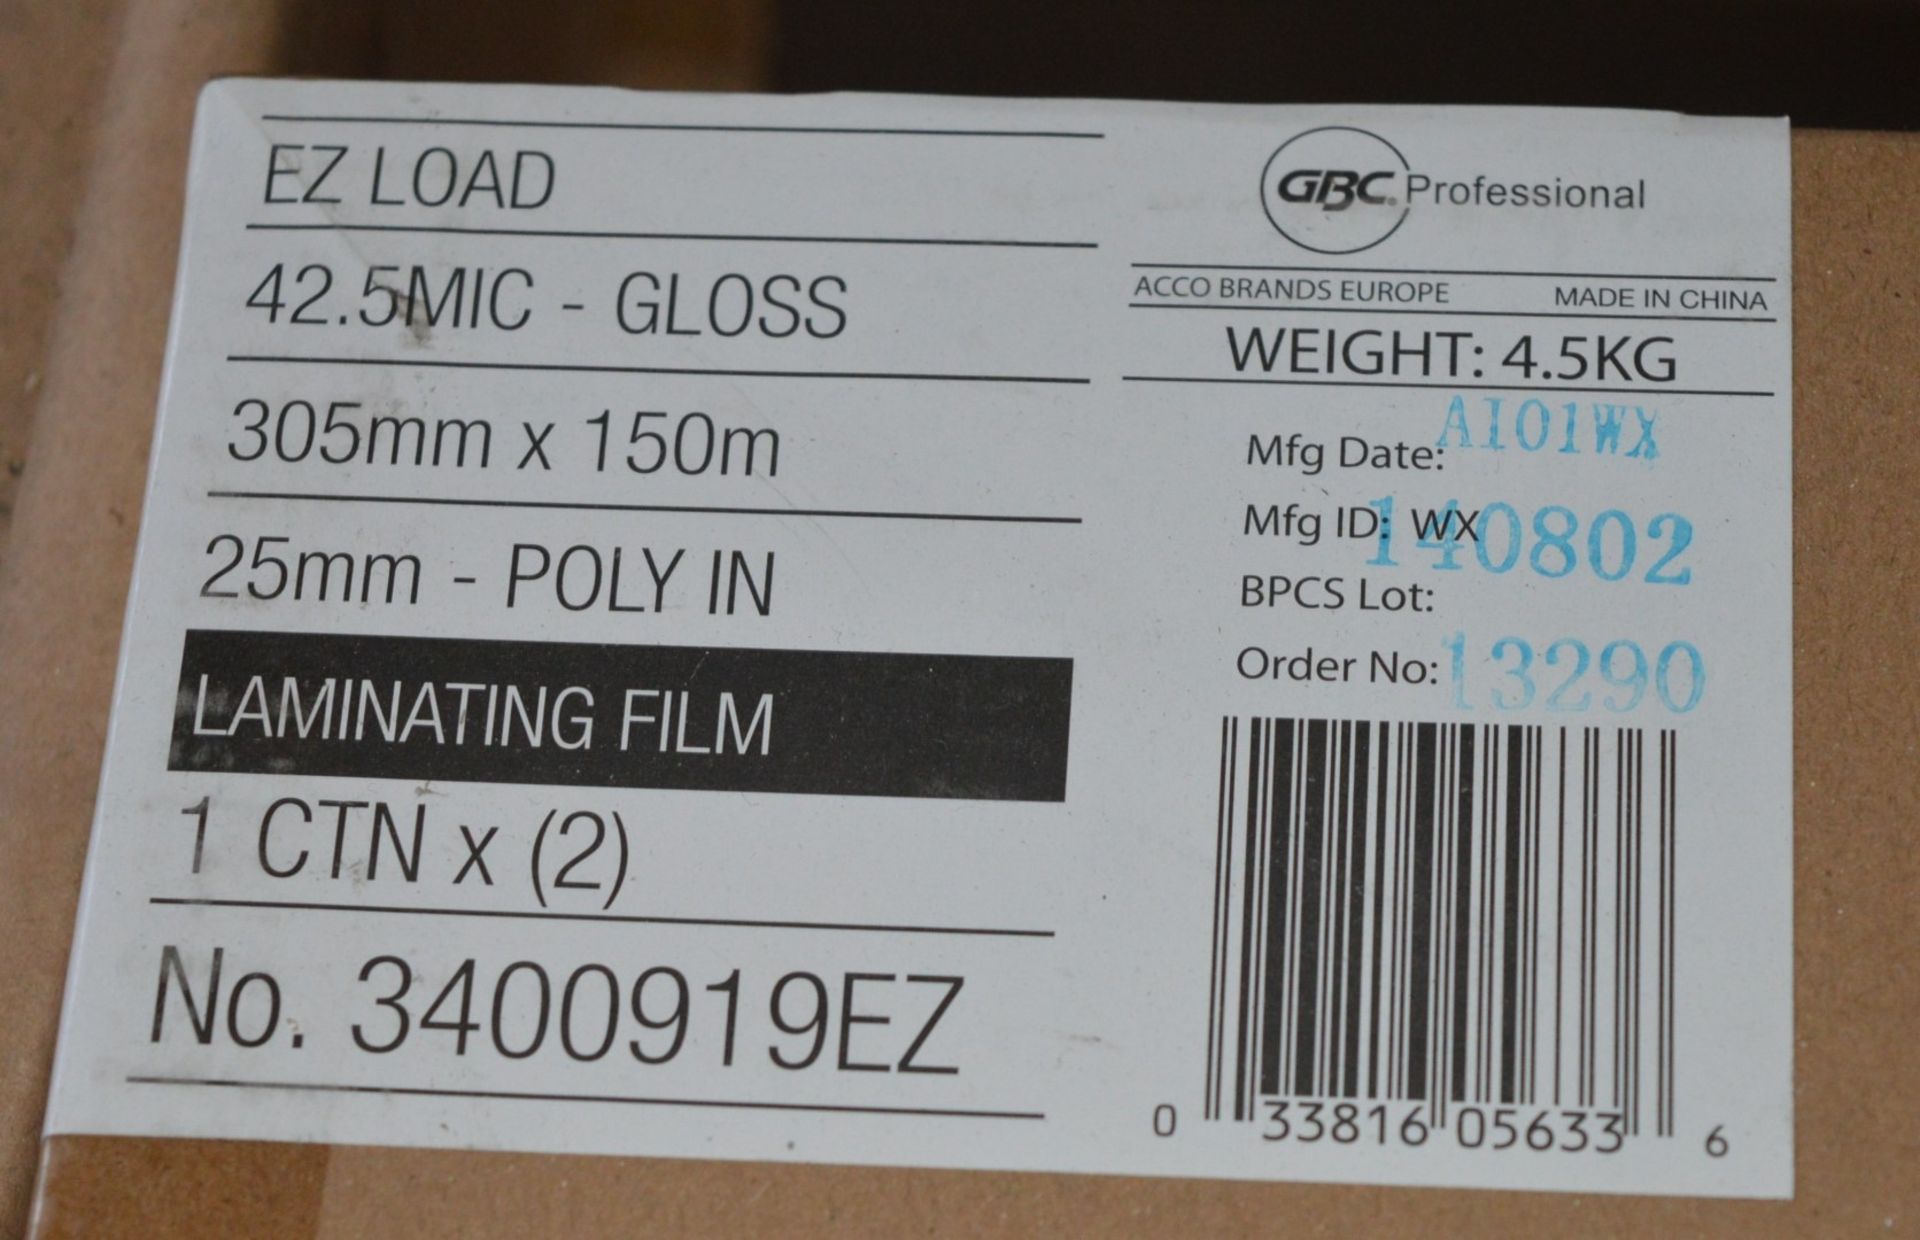 2 x GBC Ultima 35 Ezload Roll Film - 305mm x 150m 42.4 Micron - Gloss - Type 3400919EZ - Includes - Image 2 of 3